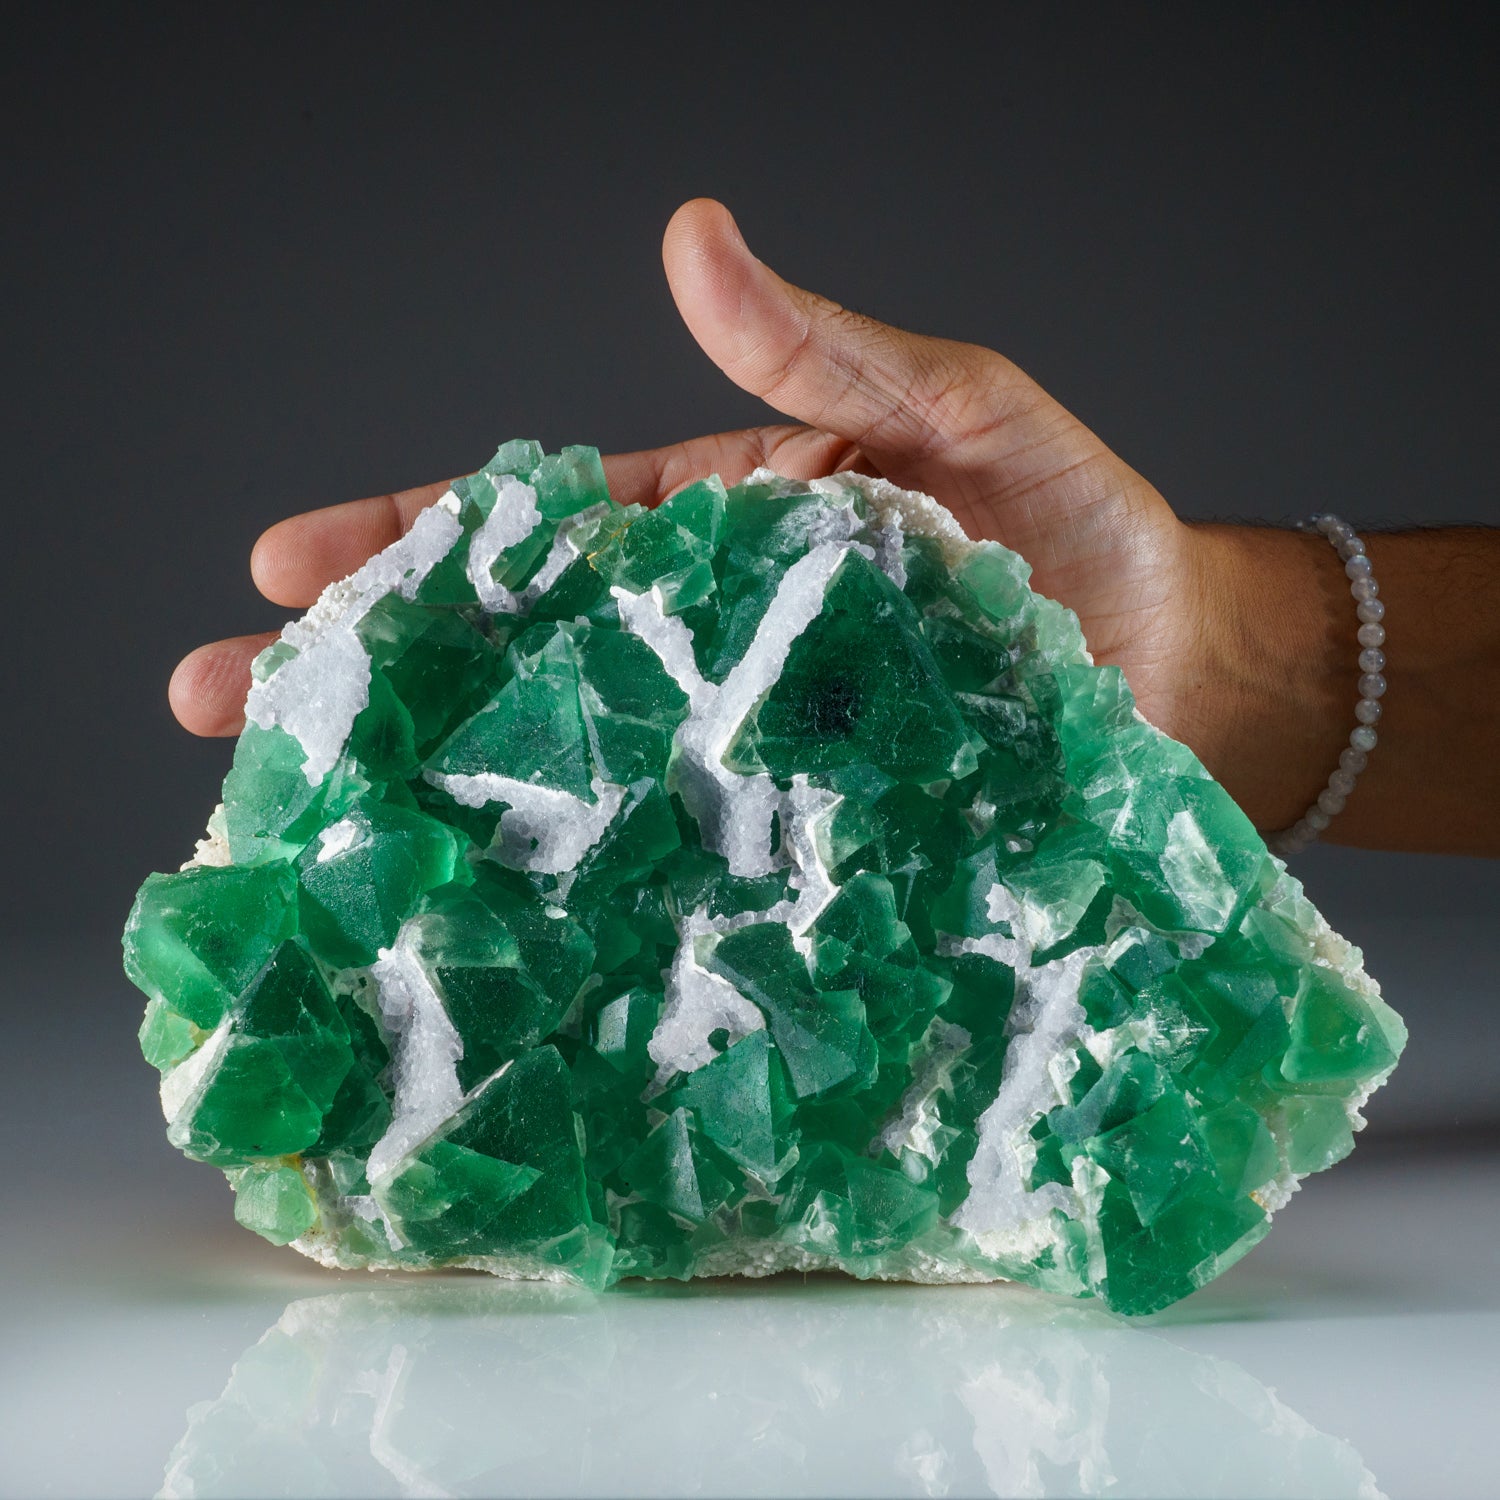 1 Yellow-Green Autunite Crystal Cluster - Hunan, China (#147646